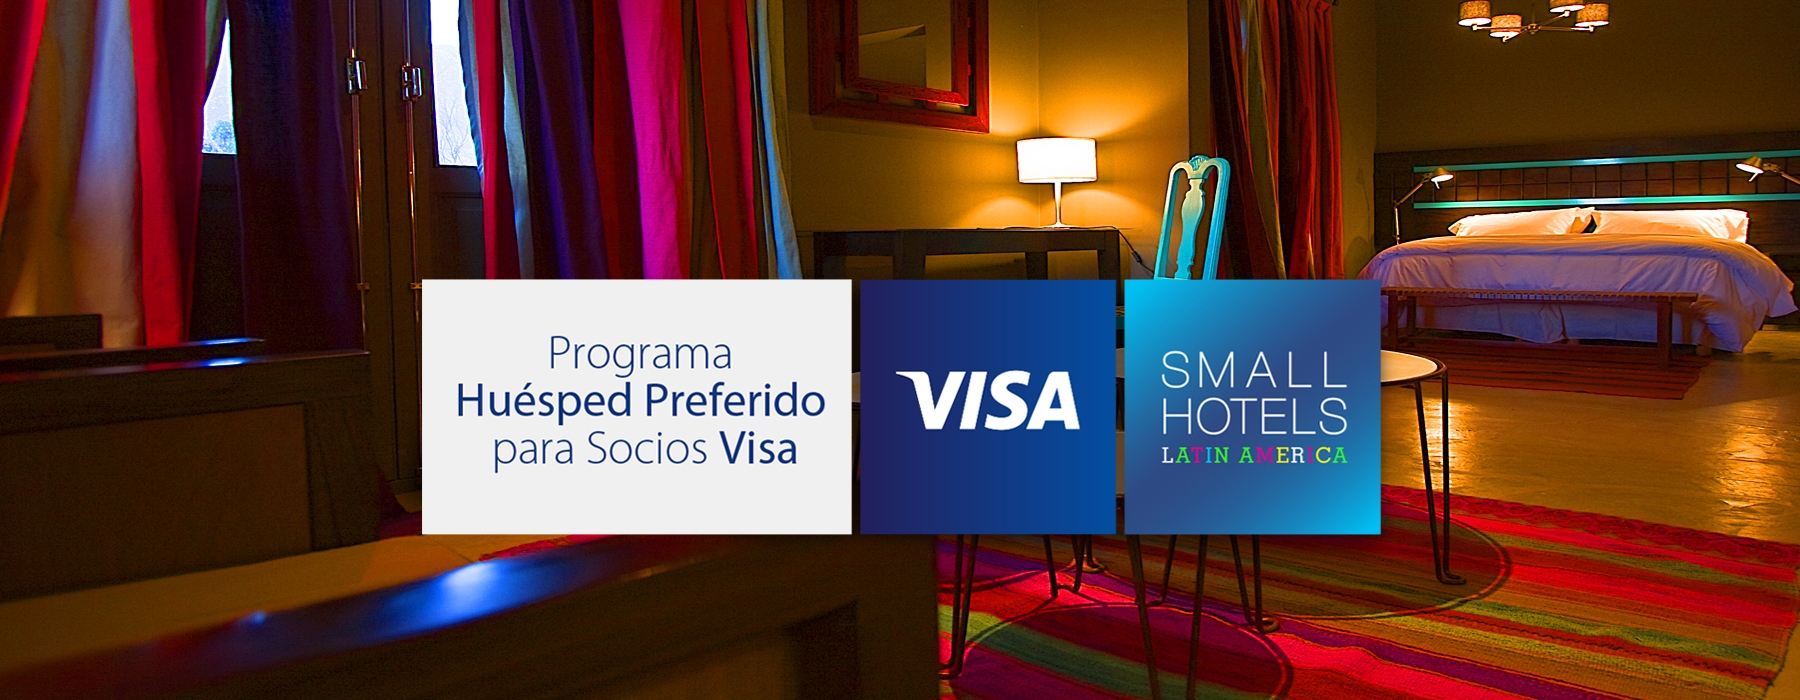 Visa Small Hotels Latin America